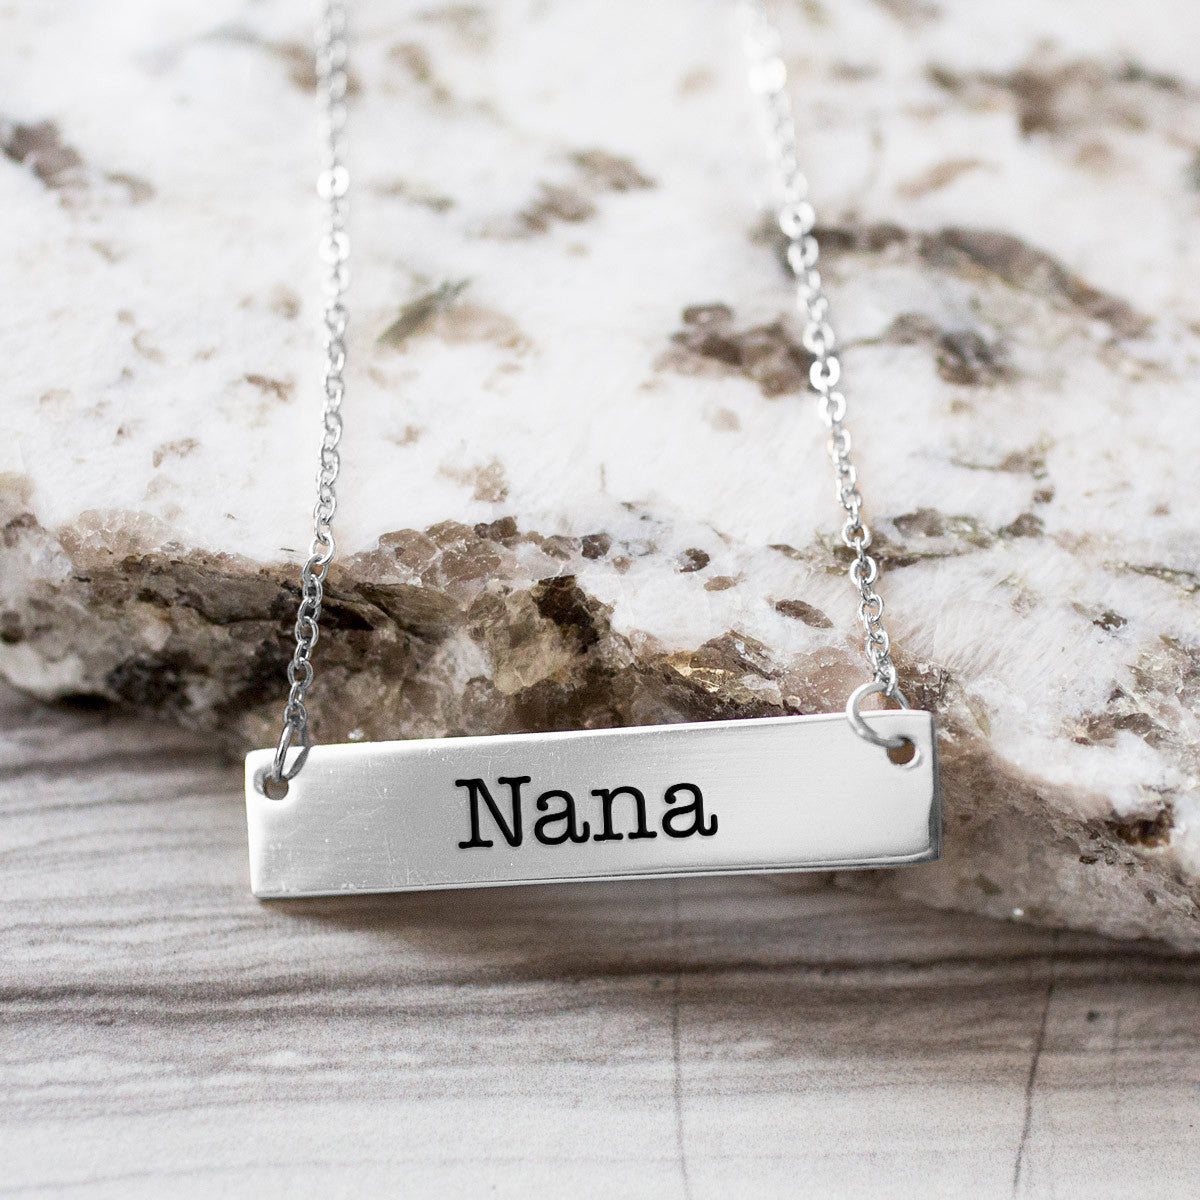 Nana Gold / Silver Bar Necklace - pipercleo.com